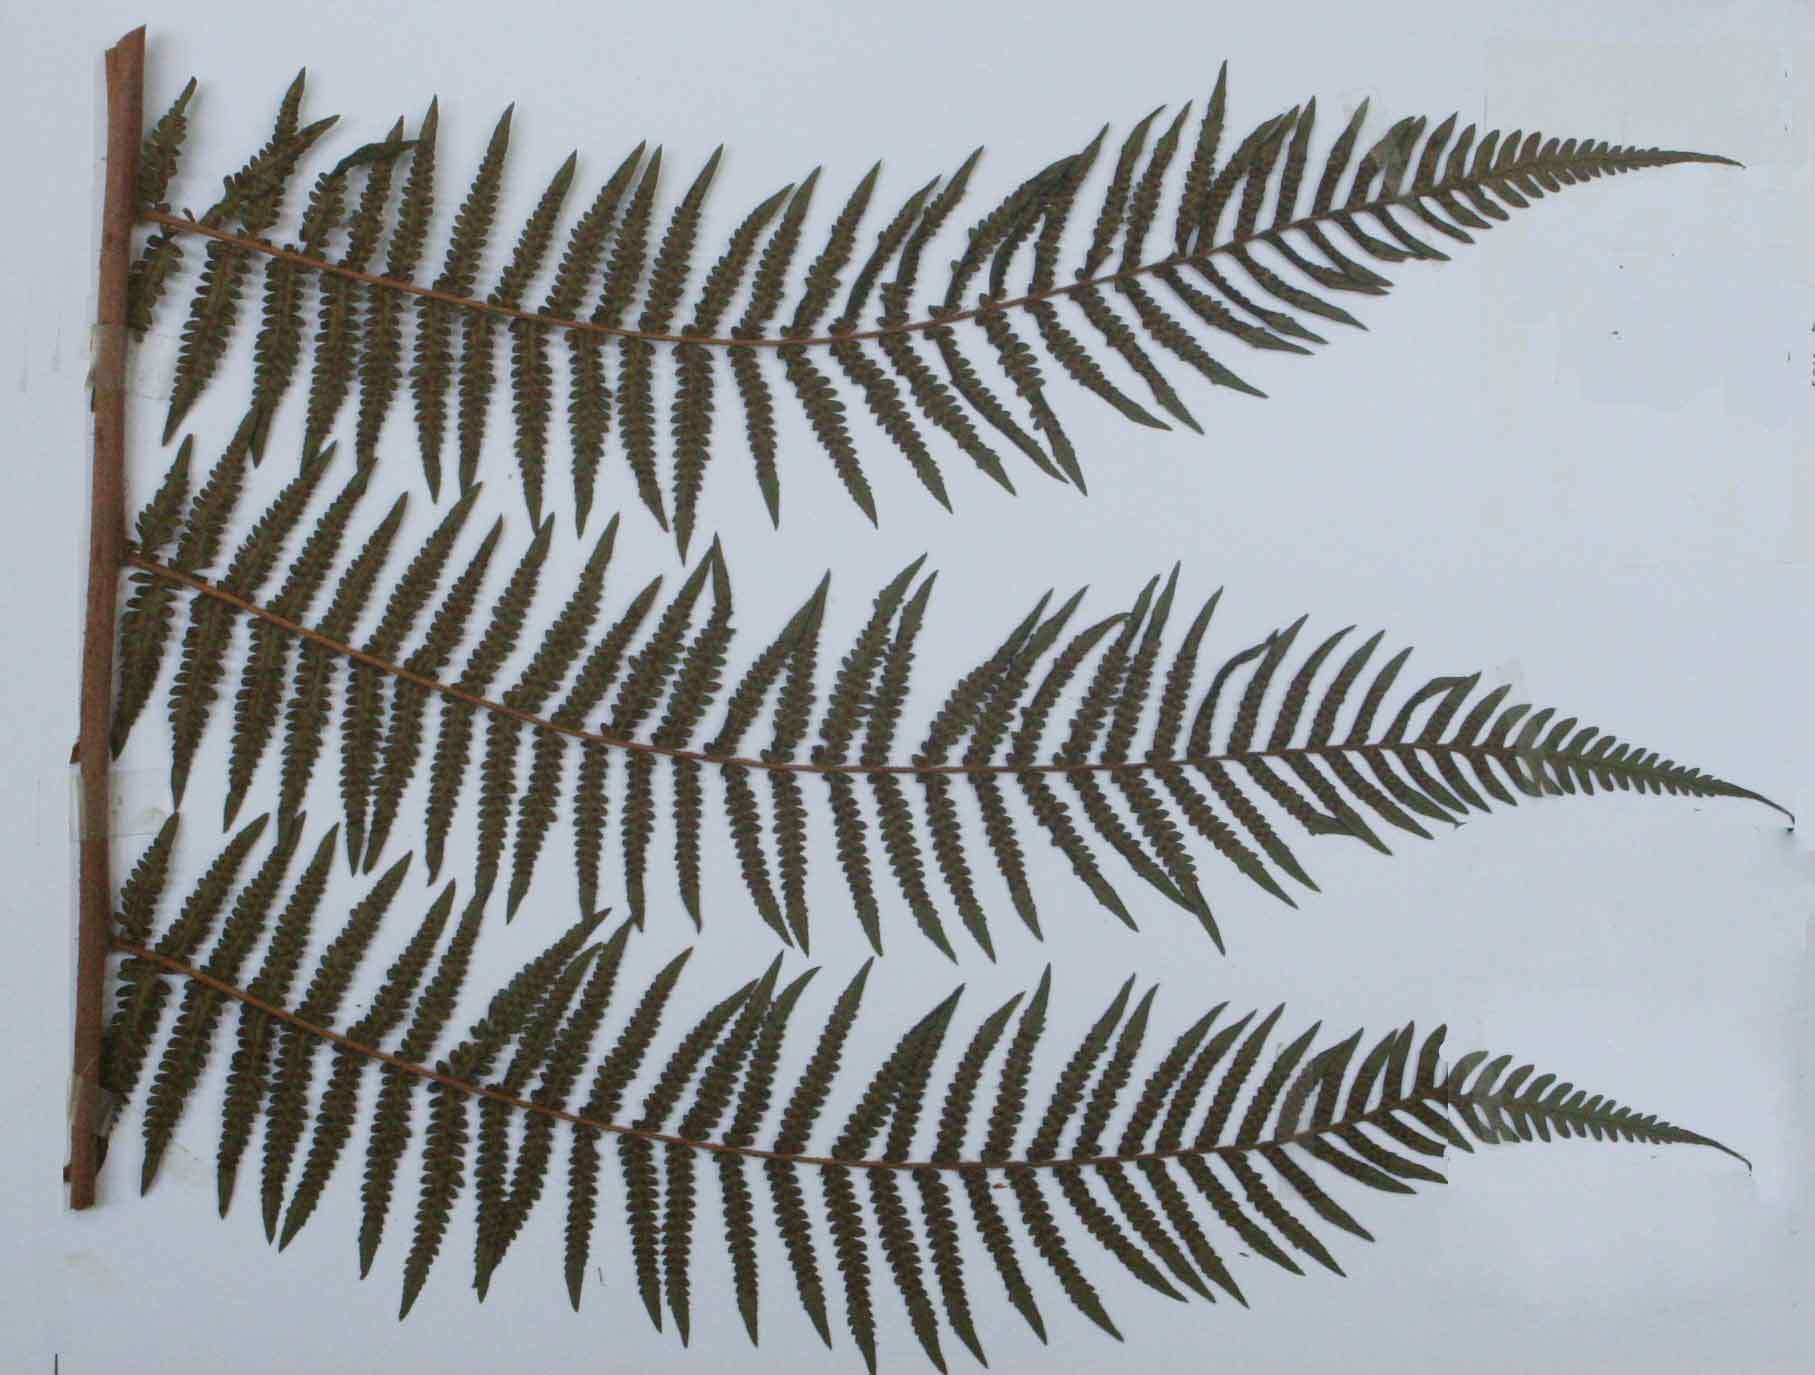 Image of Thomson's tree fern